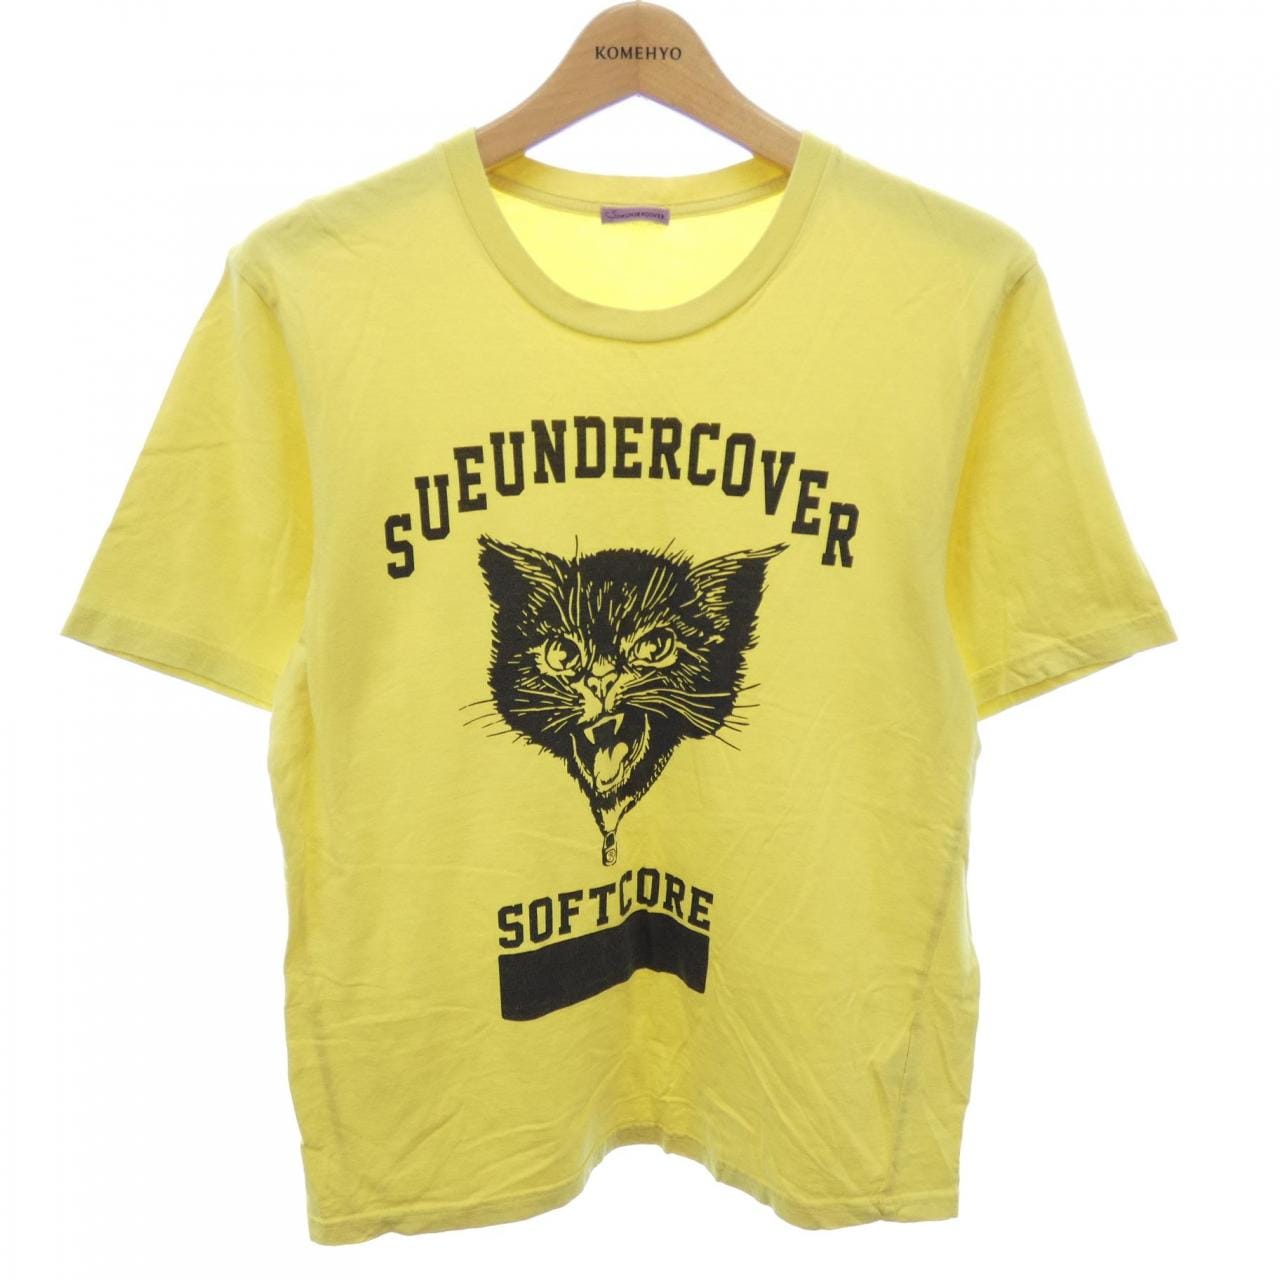 Sue UNDERCOVER T-shirt